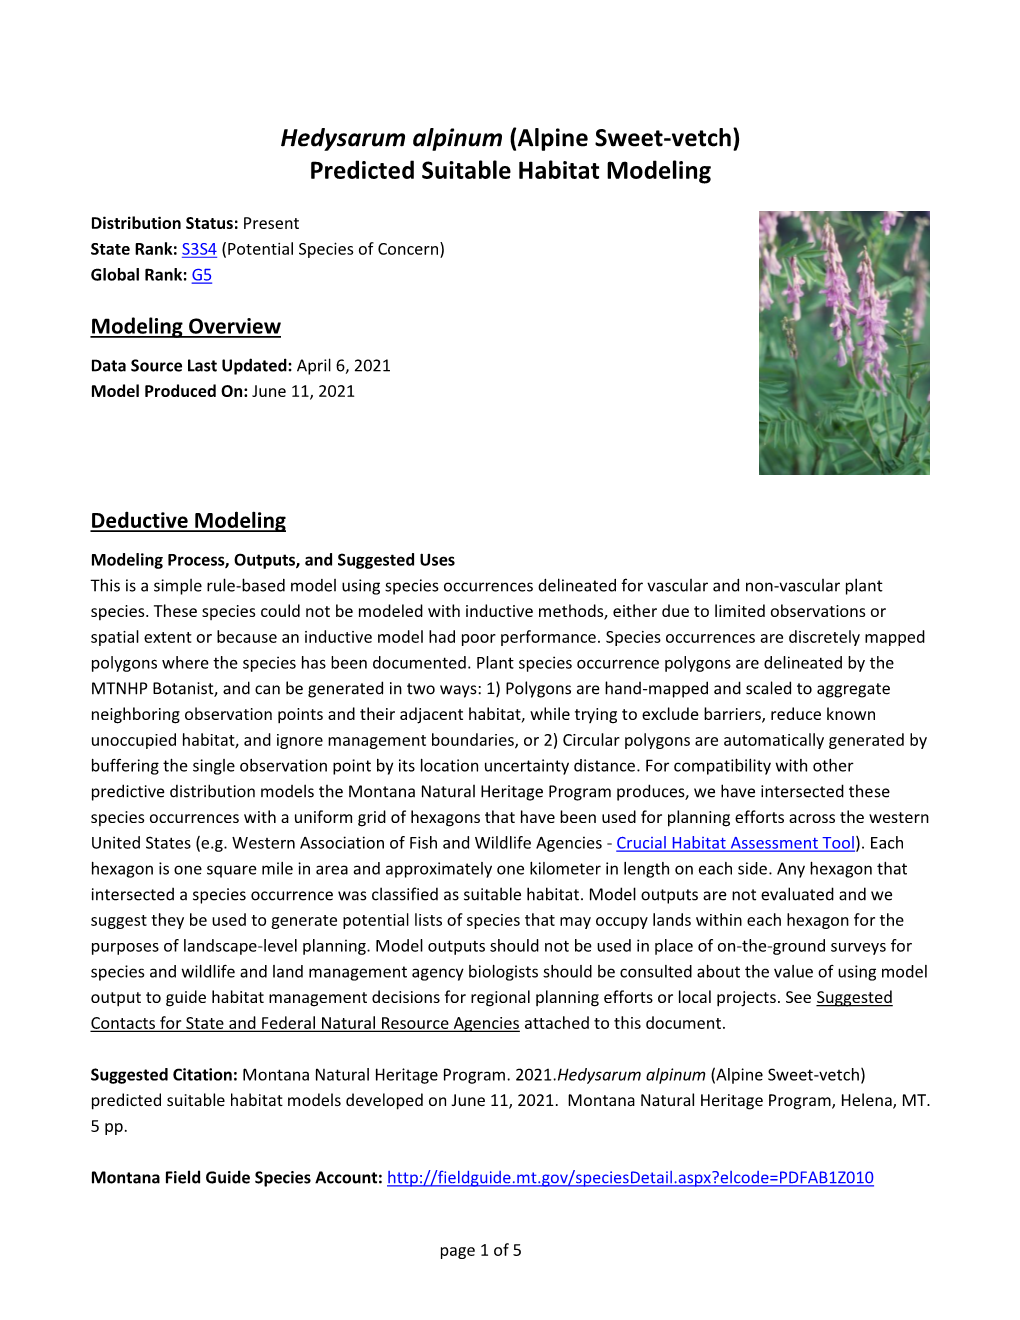 Hedysarum Alpinum (Alpine Sweet-Vetch) Predicted Suitable Habitat Modeling